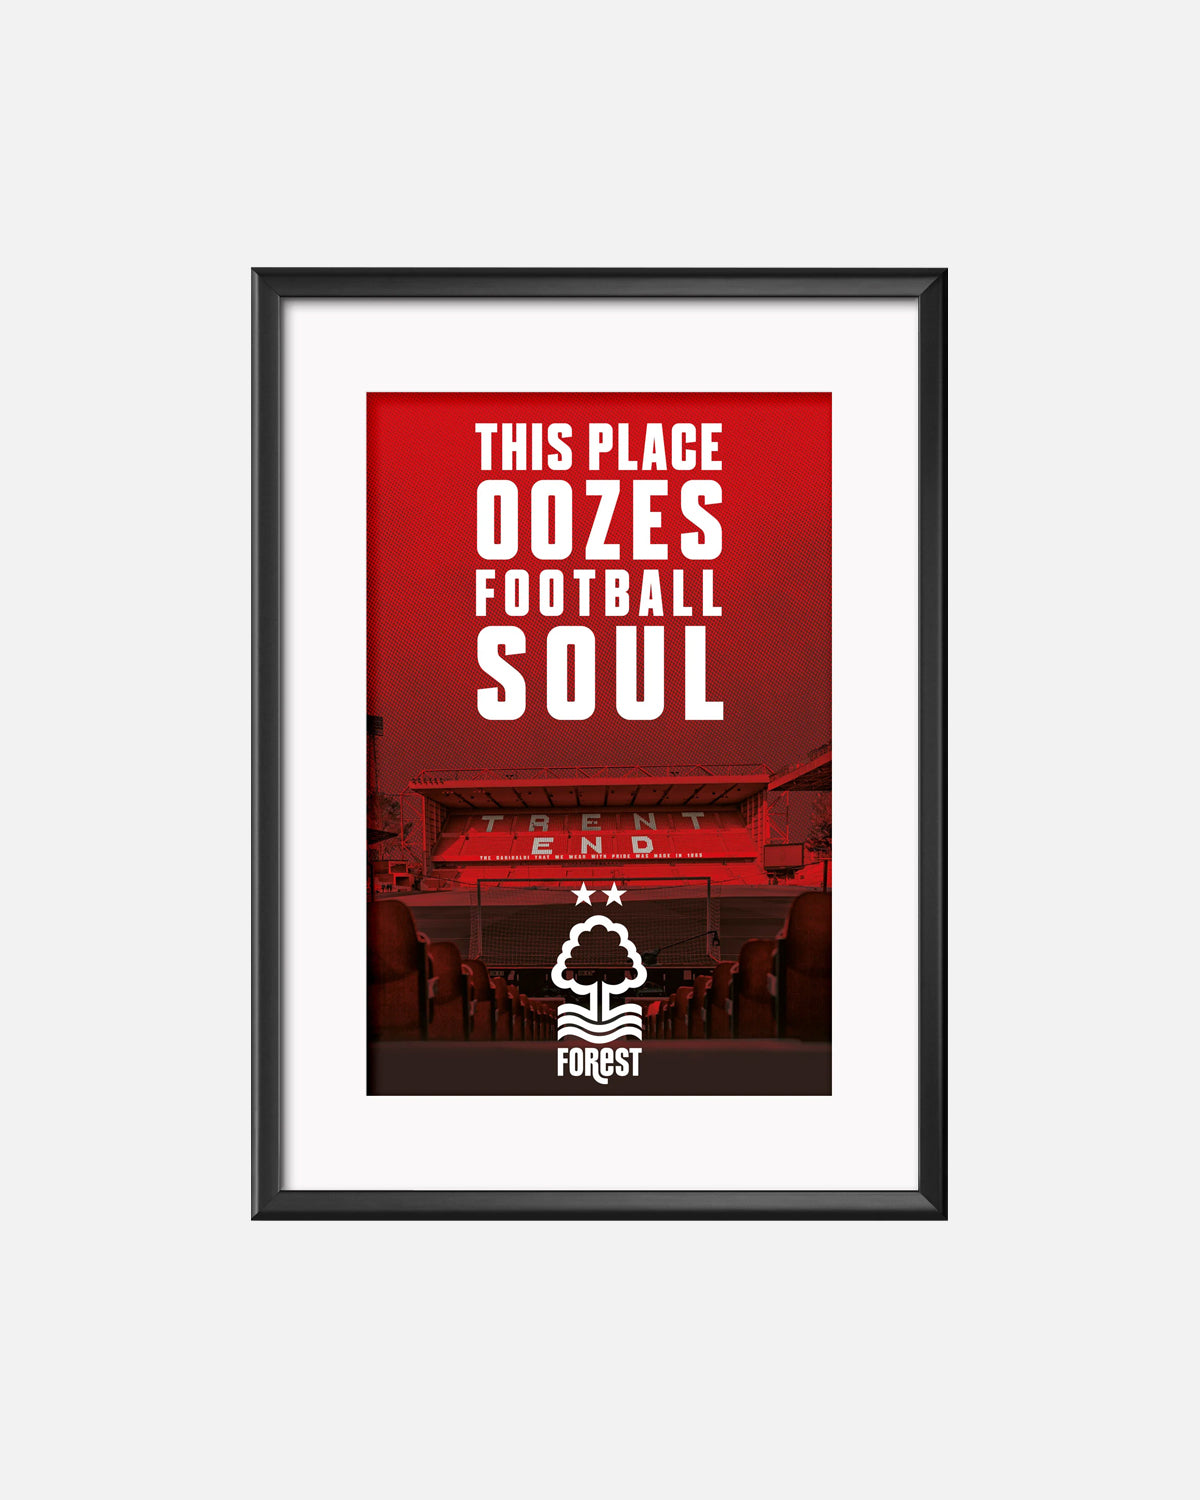 NFFC Oozes Football Soul A3 Print